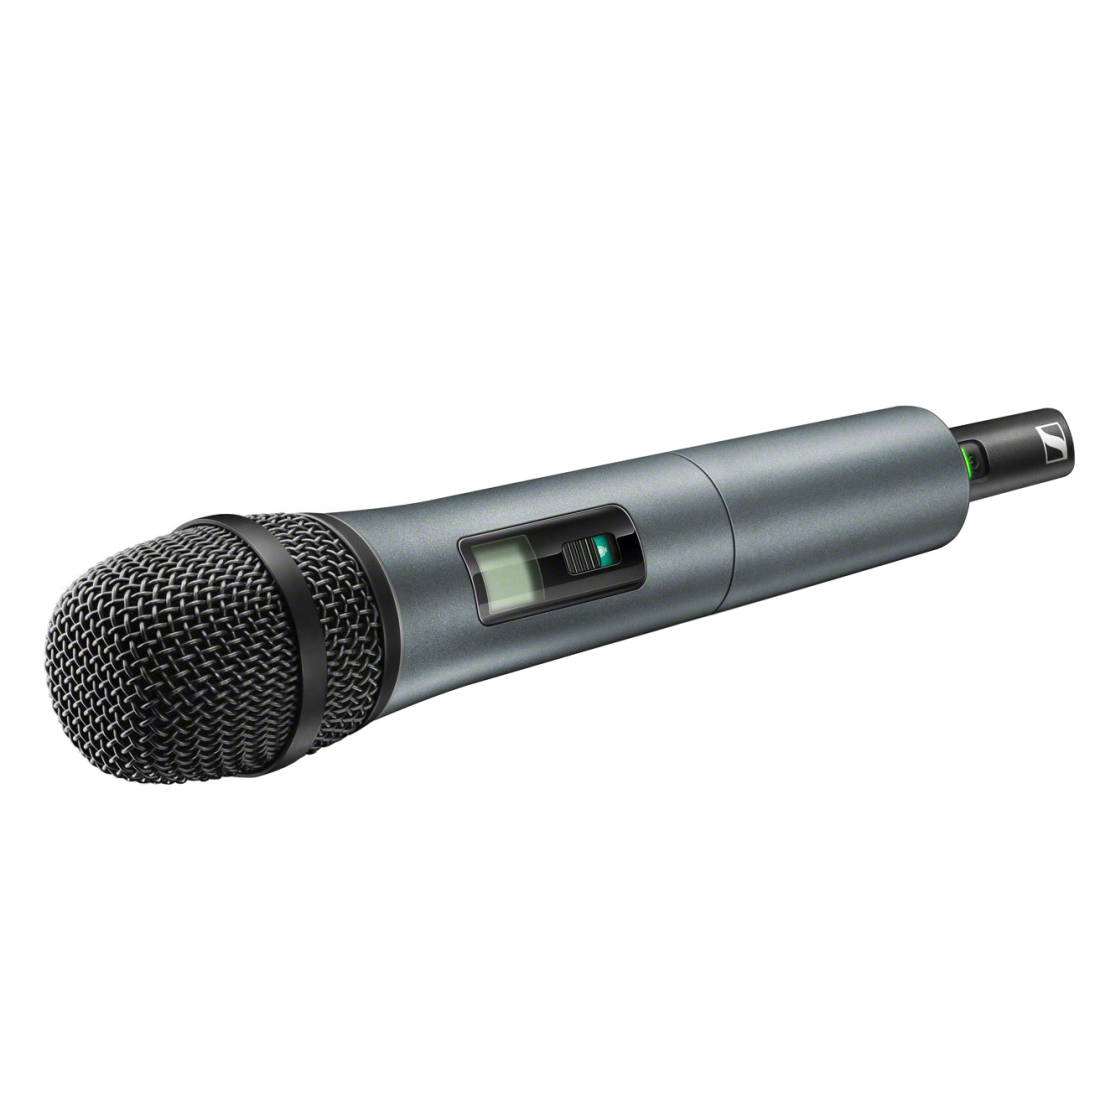 SKM 825-XSW Wireless Microphone with E825 Capsule